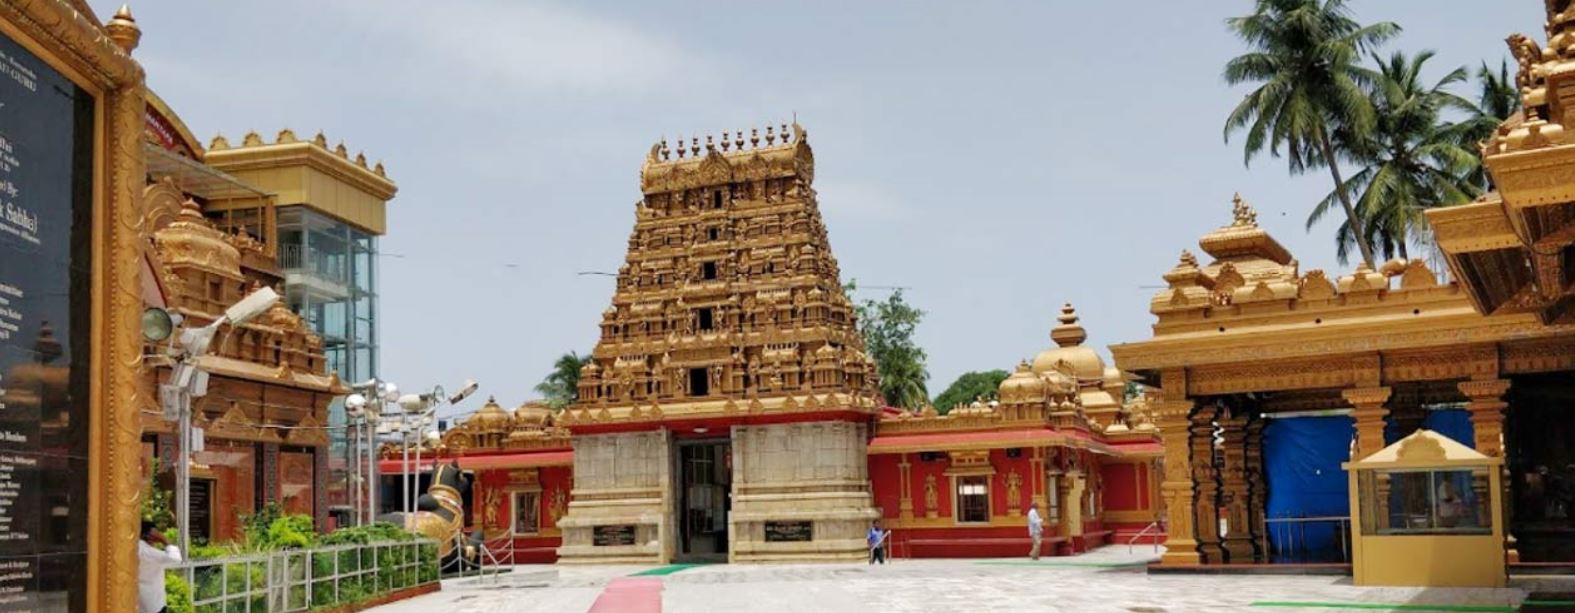 Tour del templo Jain de Nuevo Mangalore